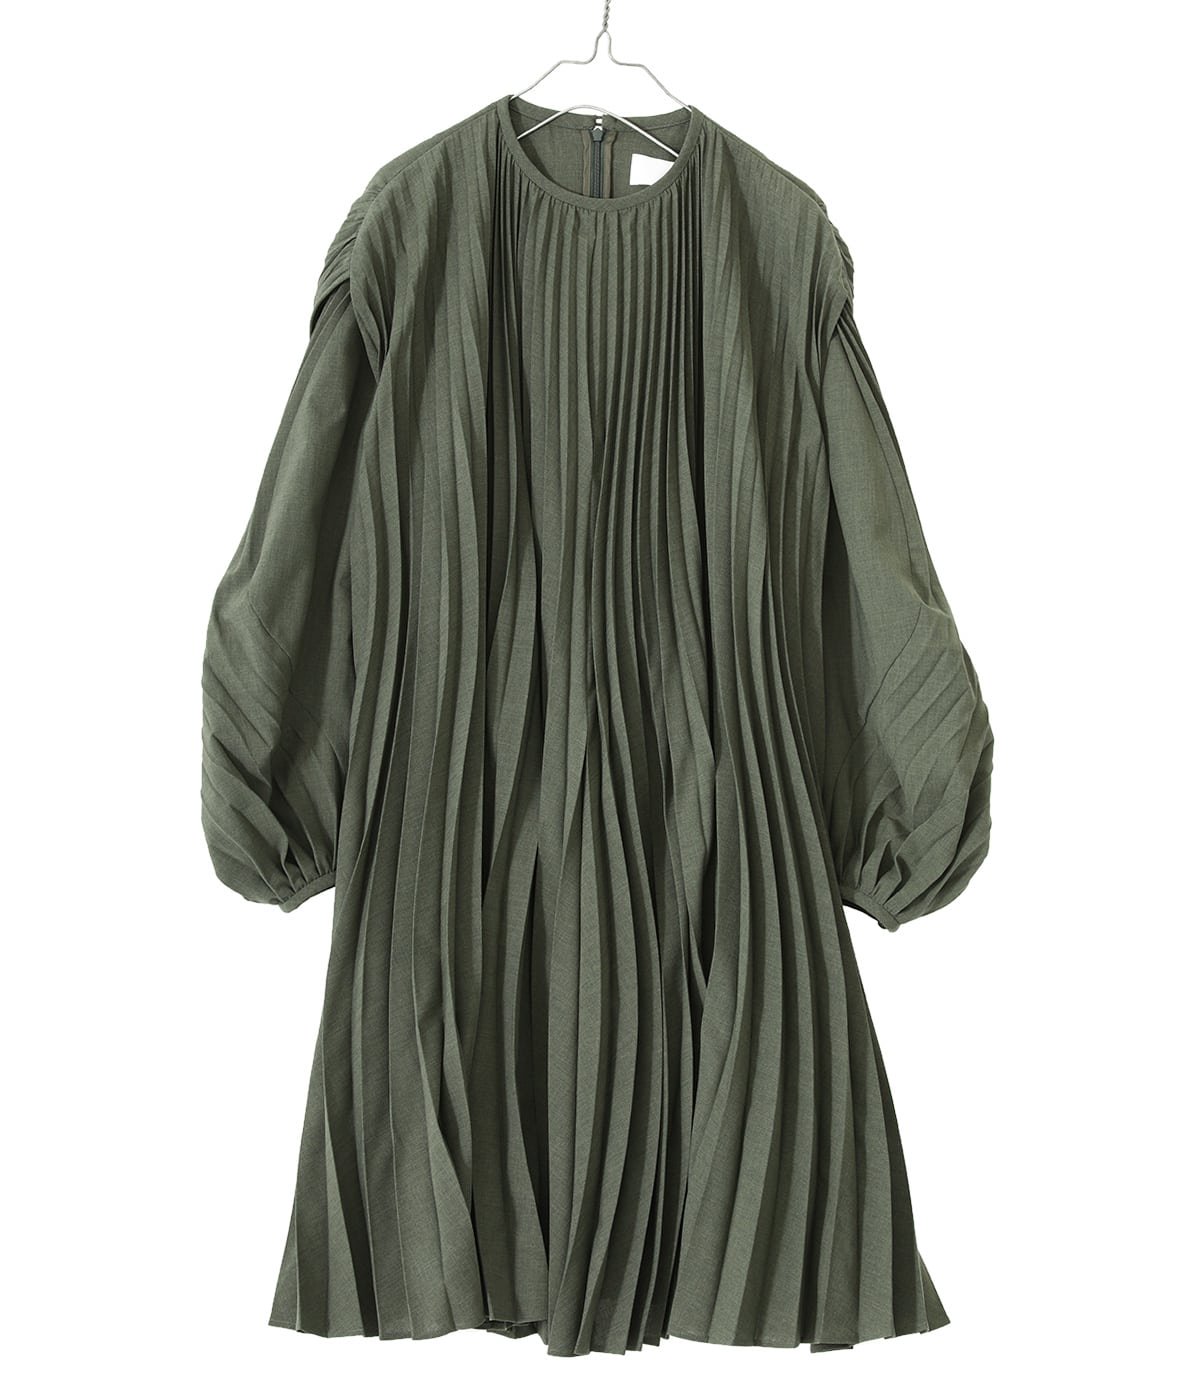 Mame Curved Pleated Dress - khaki